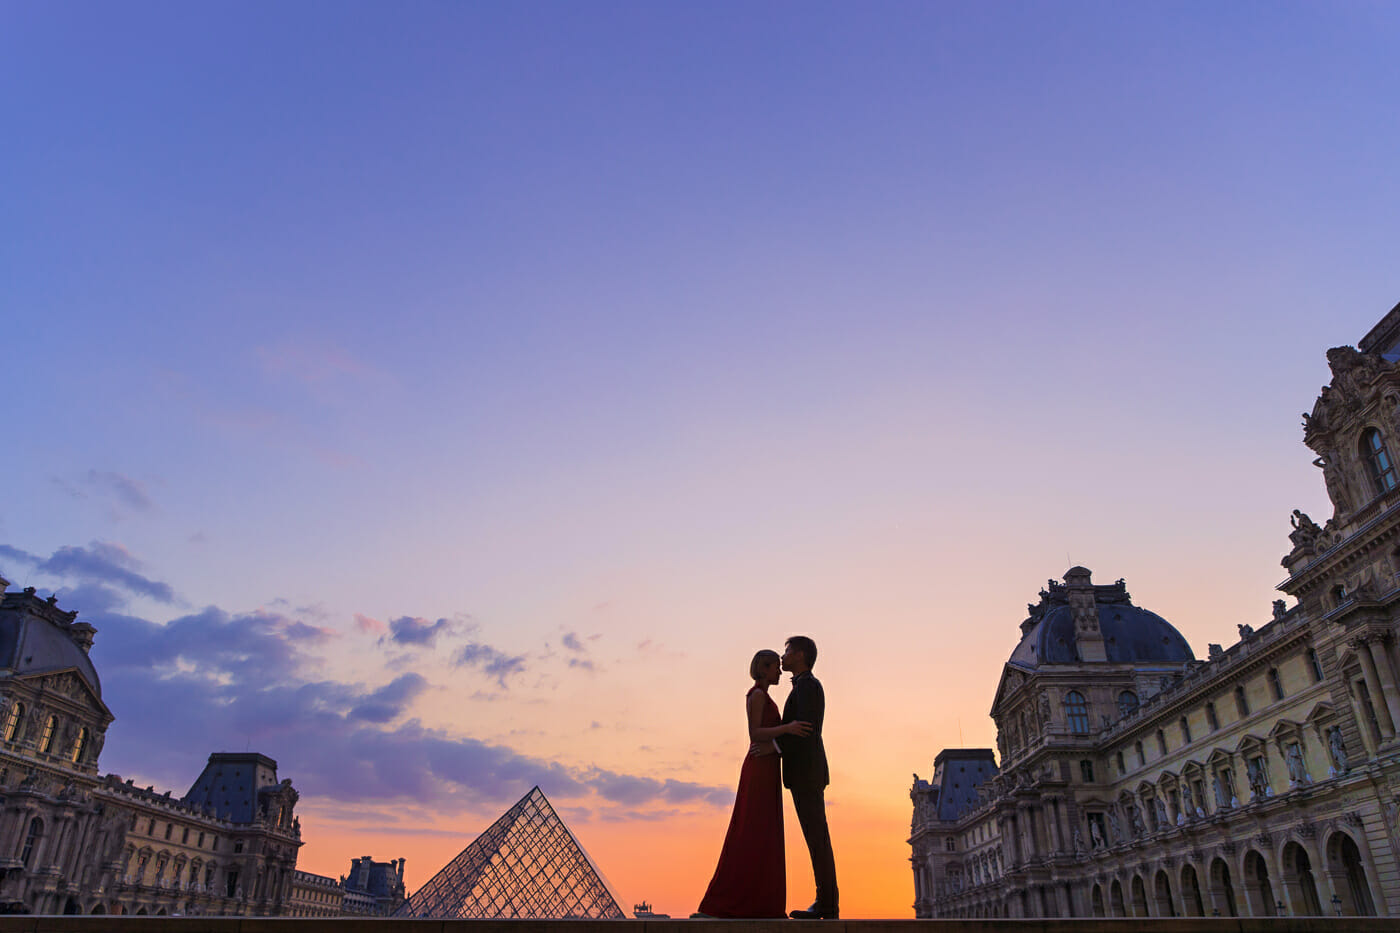 How to pose for amazing Paris silhouette photos